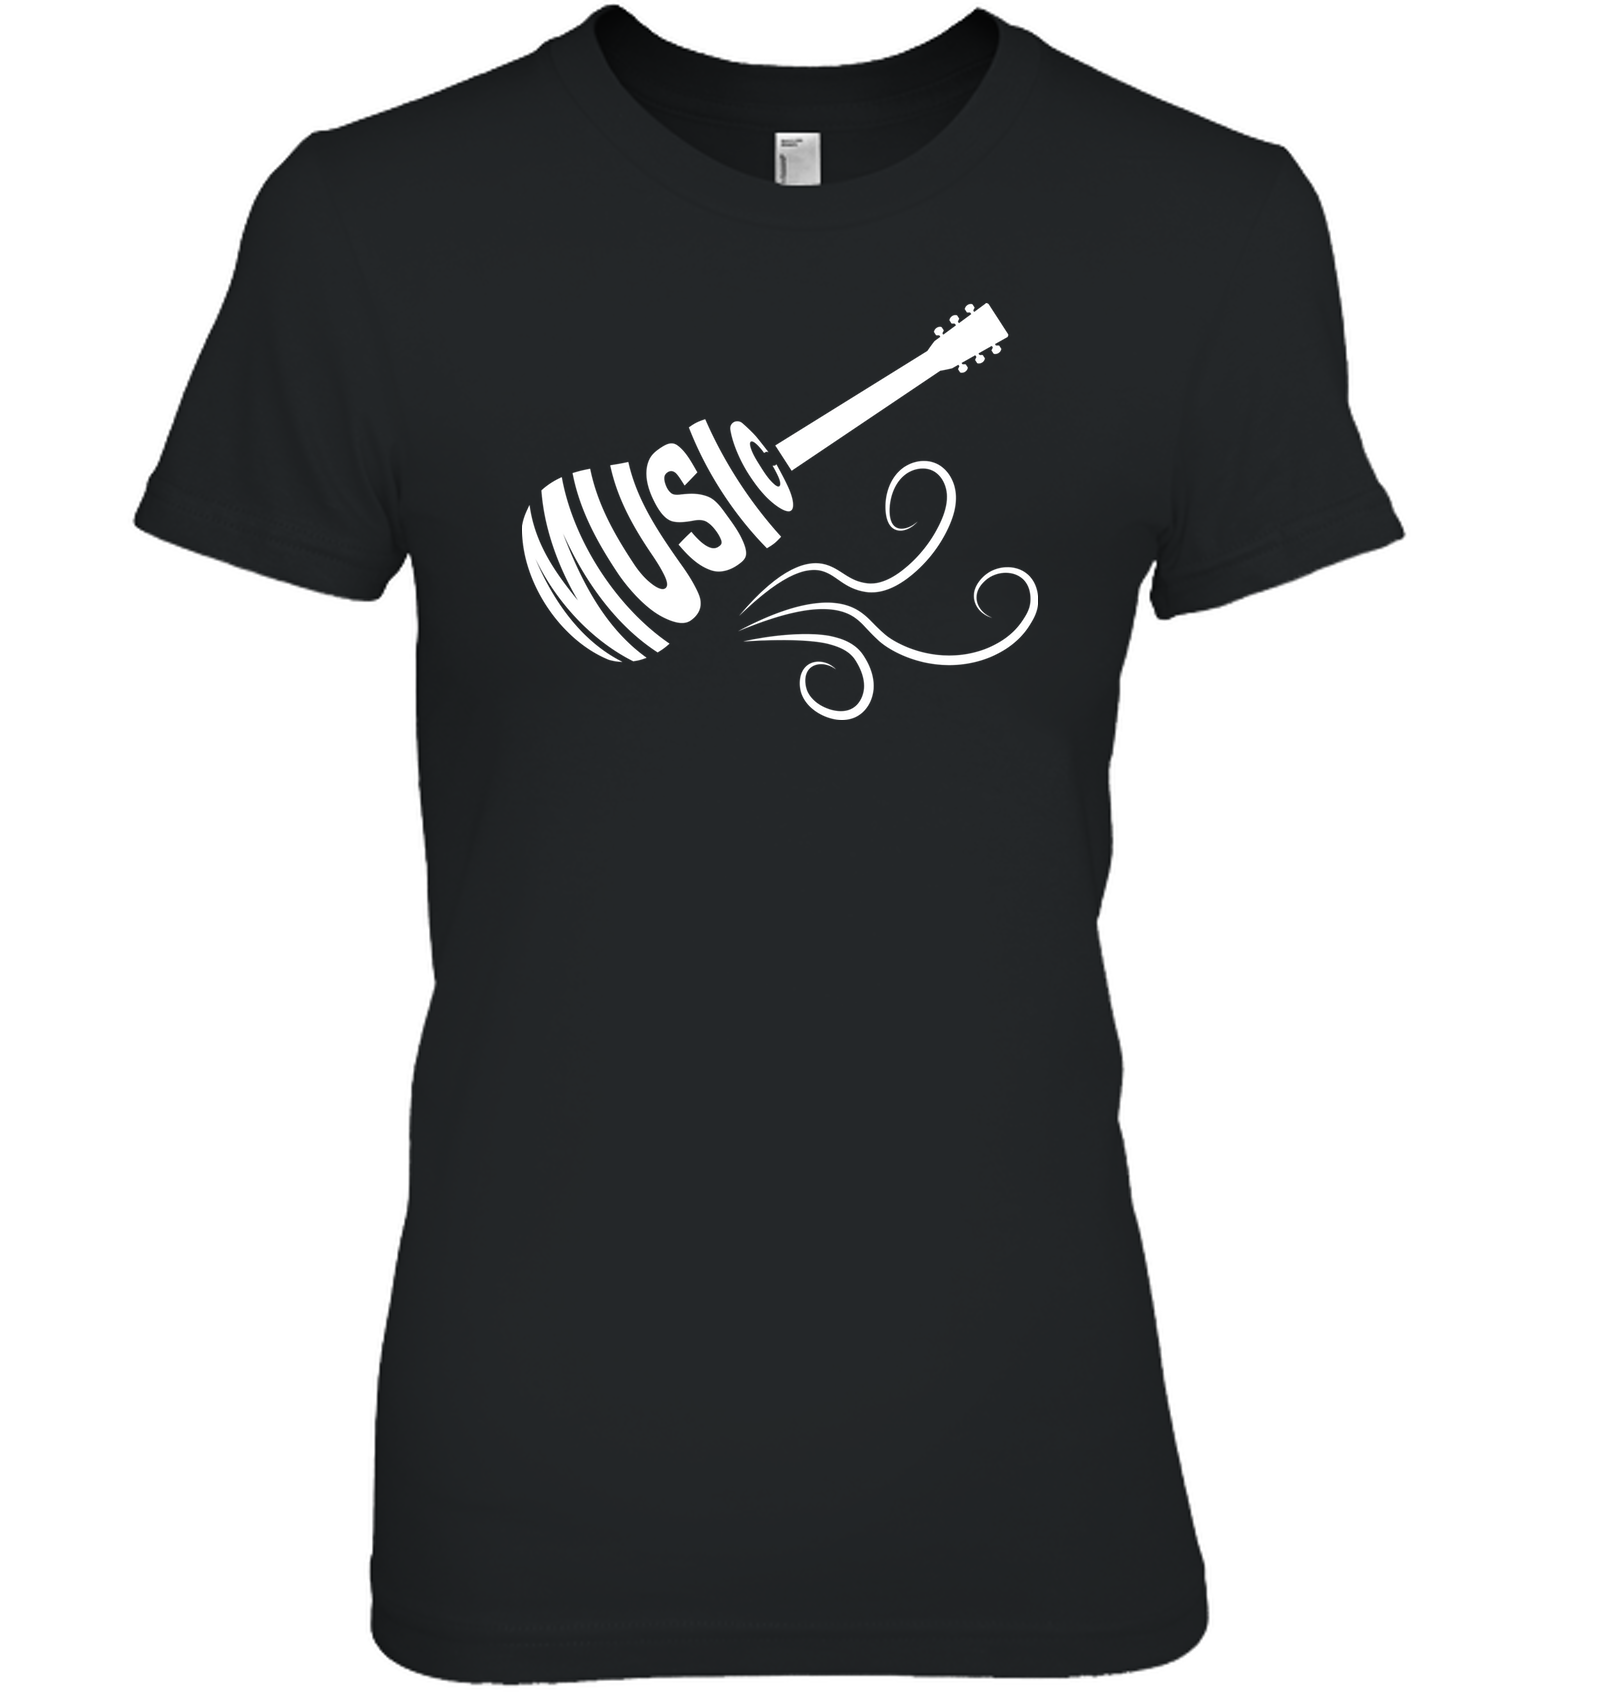 Guitar Breeze White - Hanes Women's Nano-T® T-Shirt